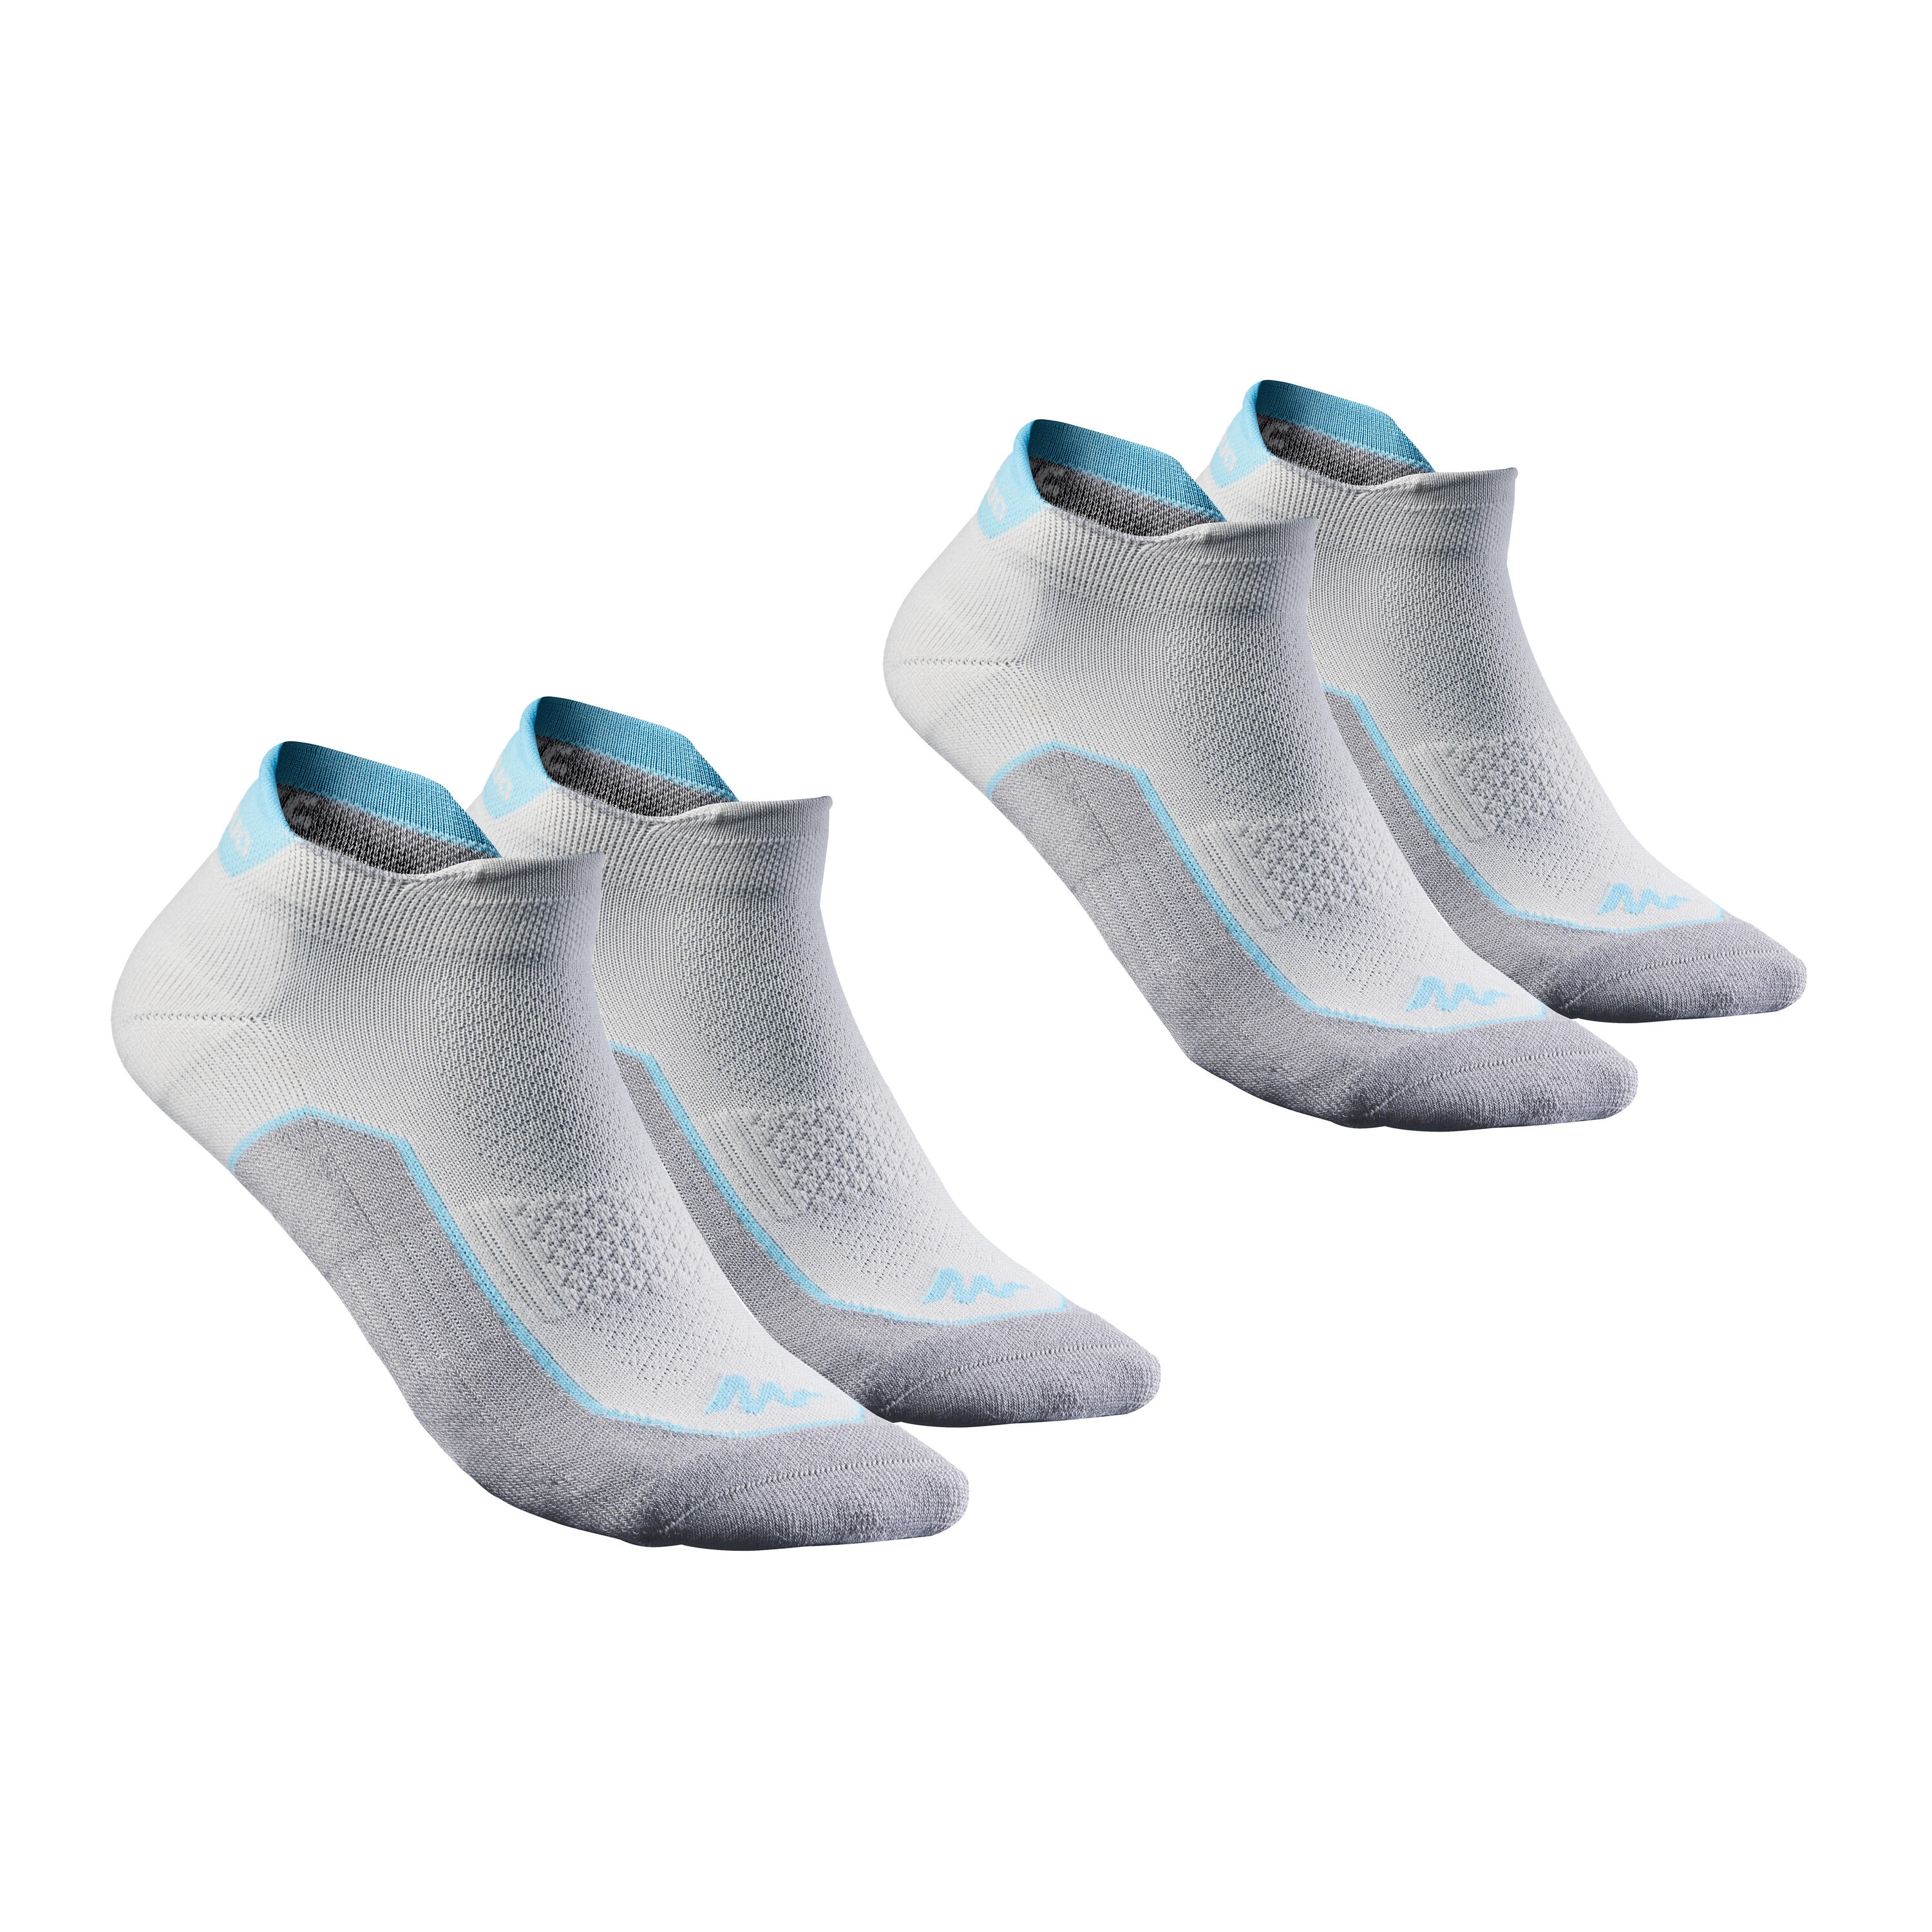 QUECHUA Nature walking socks - NH500 Low - X 2 pairs - grey